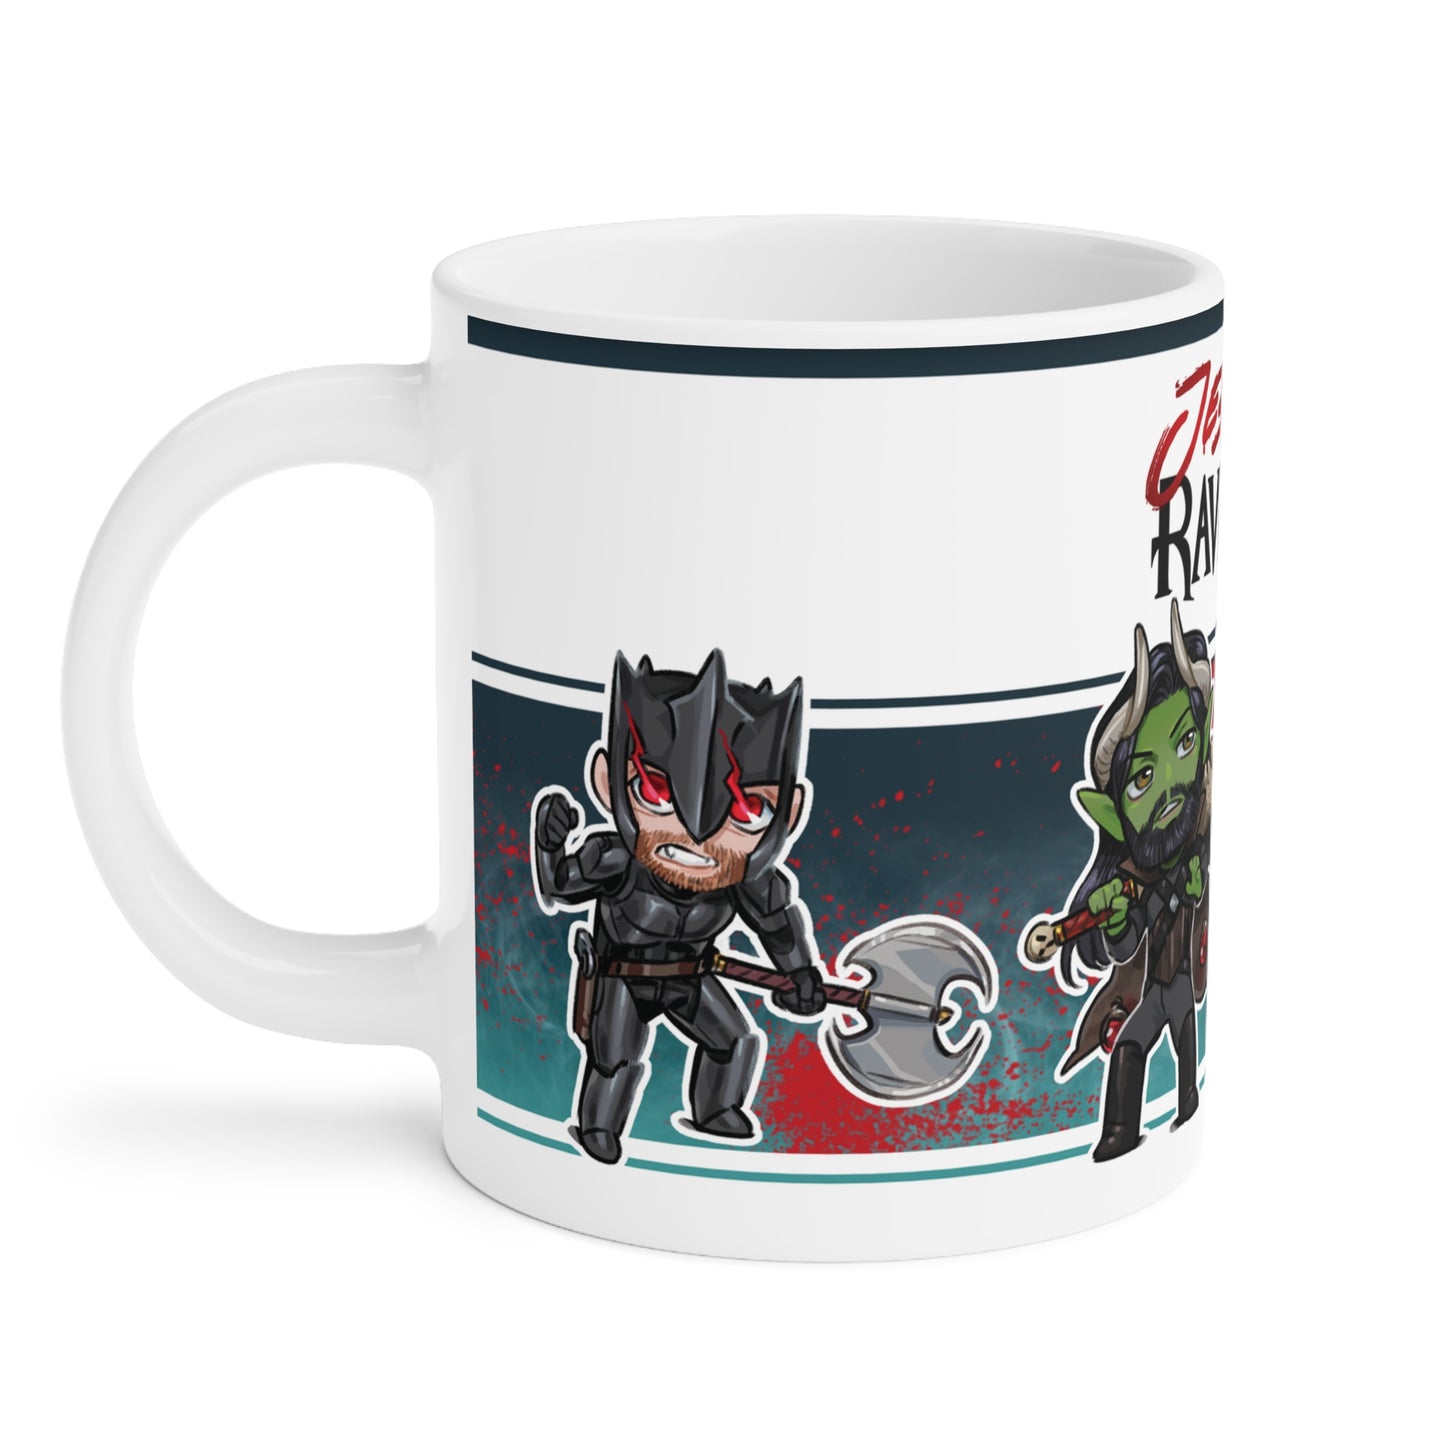 Jesters of Ravenloft: Chibi Mug